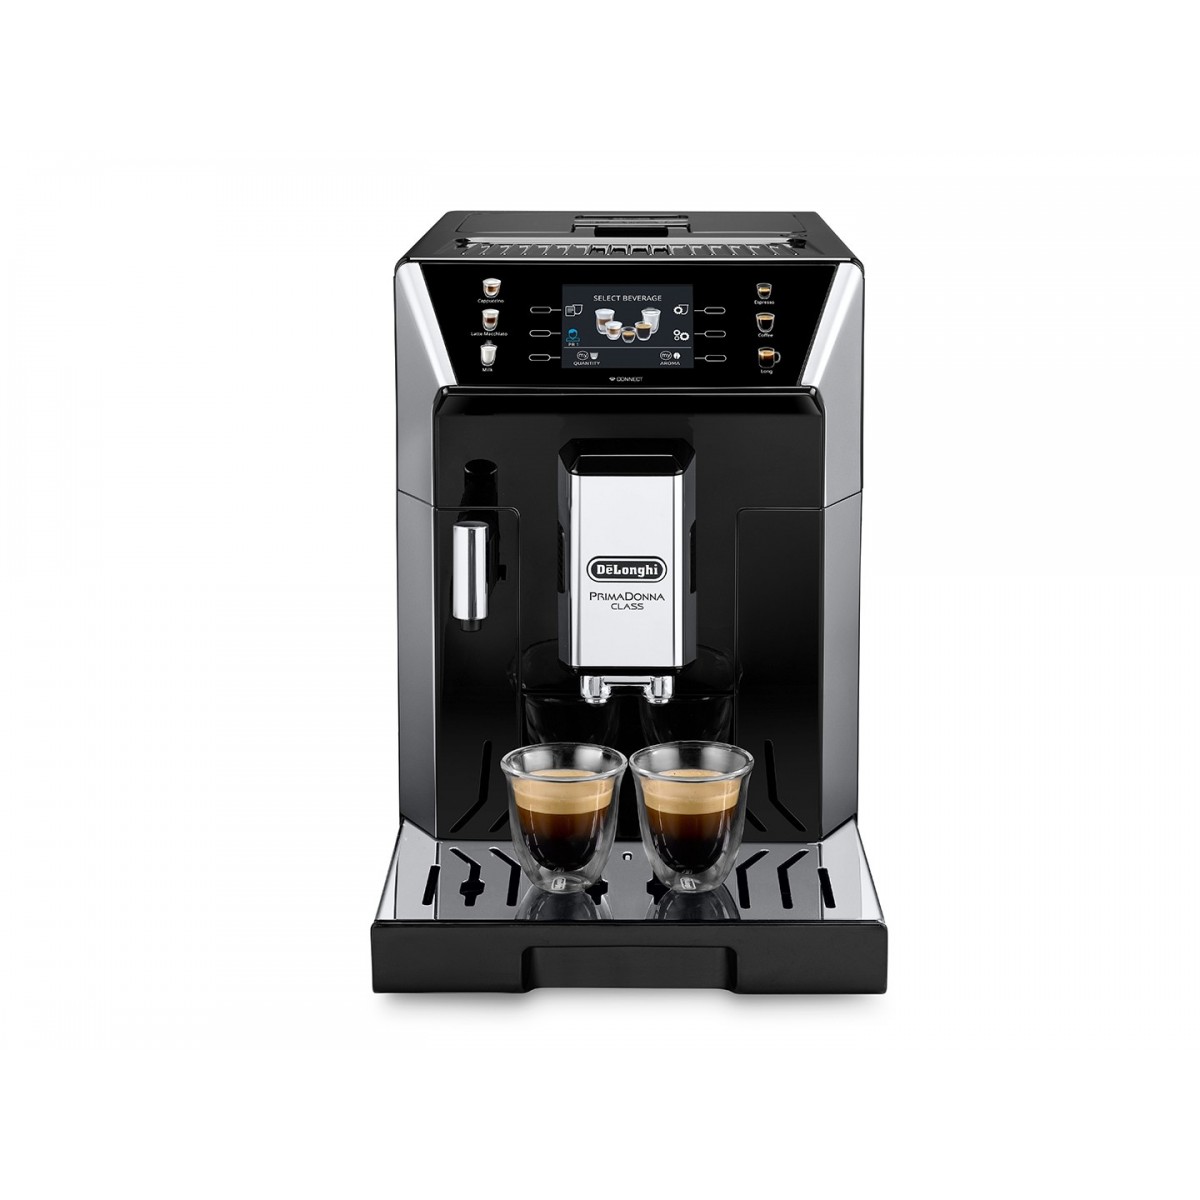 De Longhi ECAM 550.65.SB - Combi coffee maker - Coffee beans - Built-in grinder - 1450 W - Black - Silver